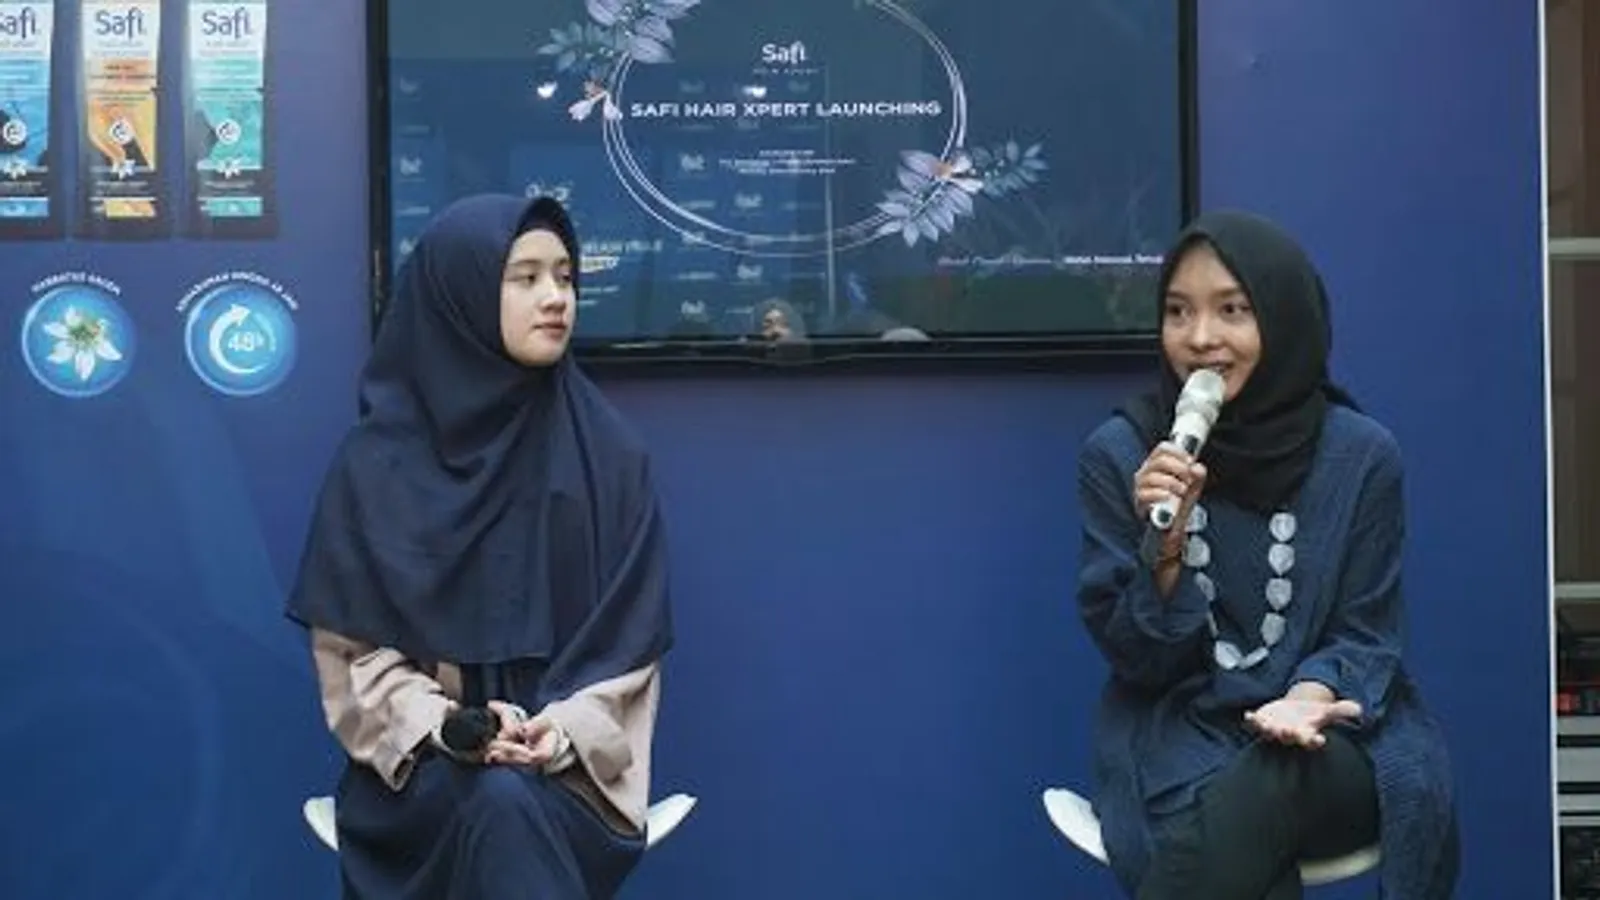 Cewek Hijab Suka Bingung Pilih Shampoo? Safi Launching Inovasi Terbaru